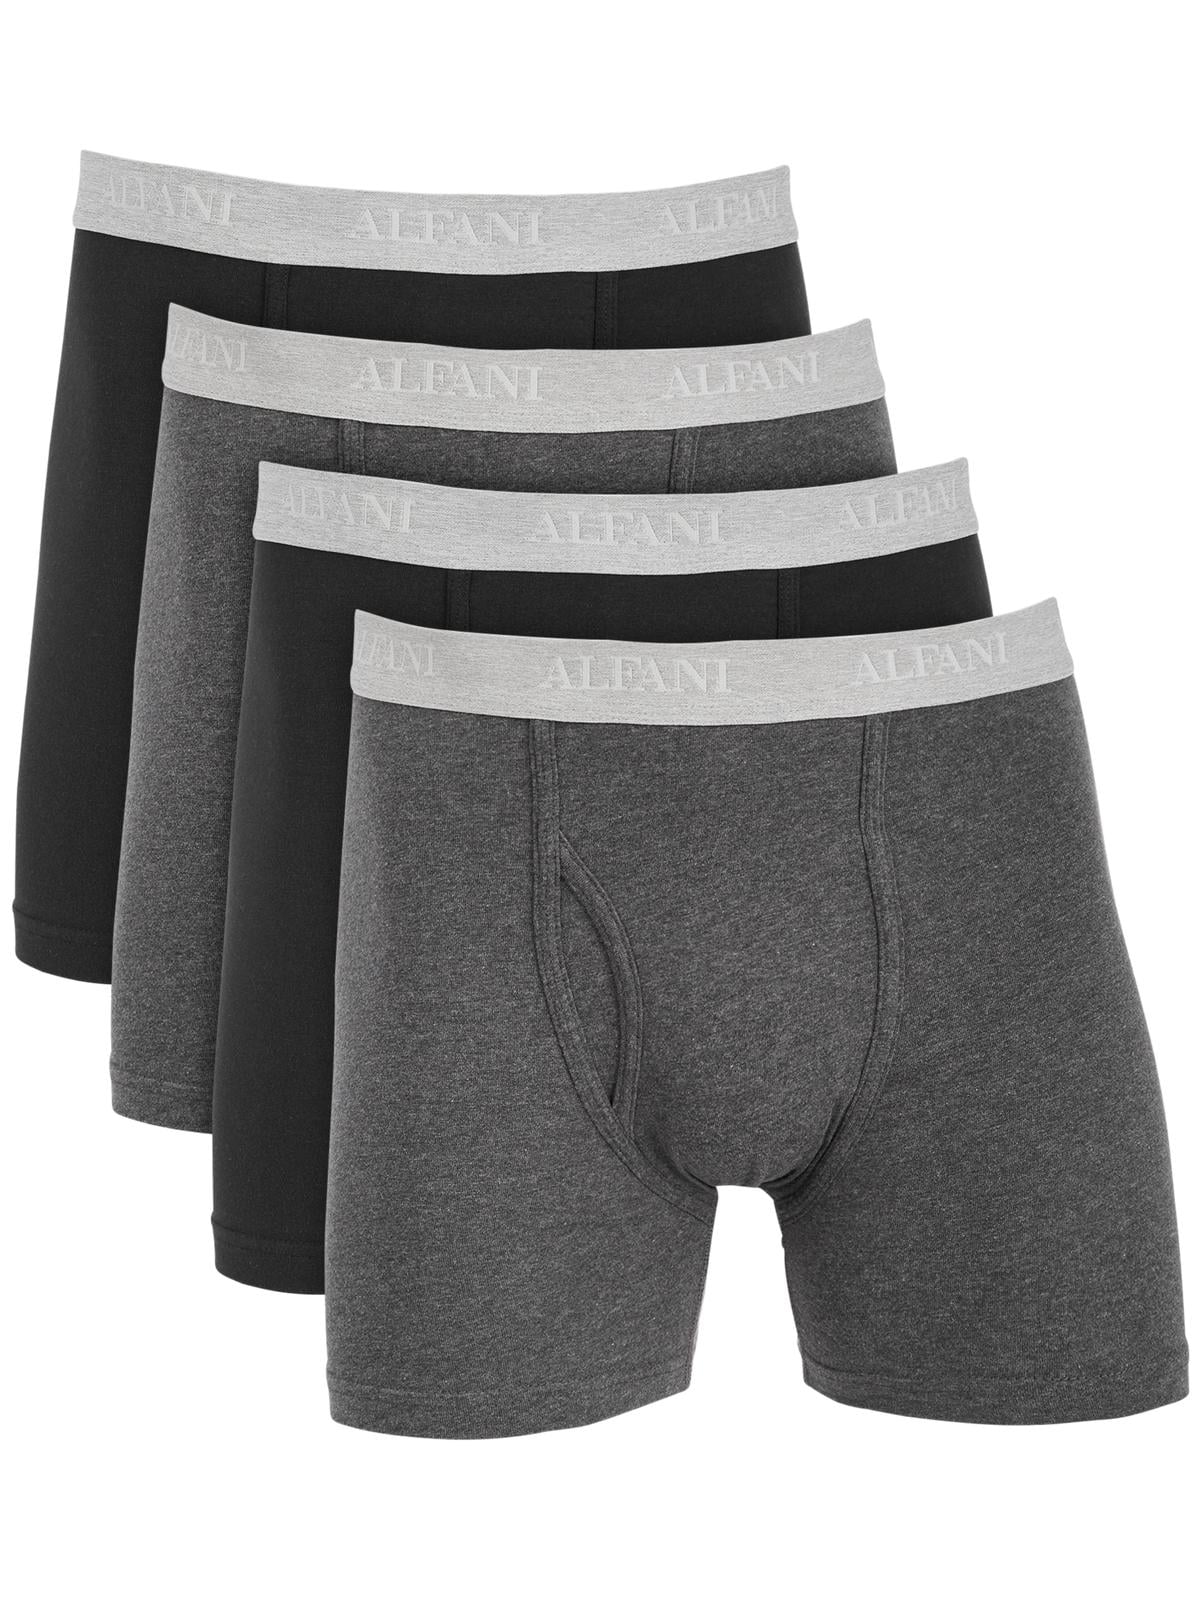 Alfani Mens 4 Pack Underwear Boxer Briefs - Walmart.com